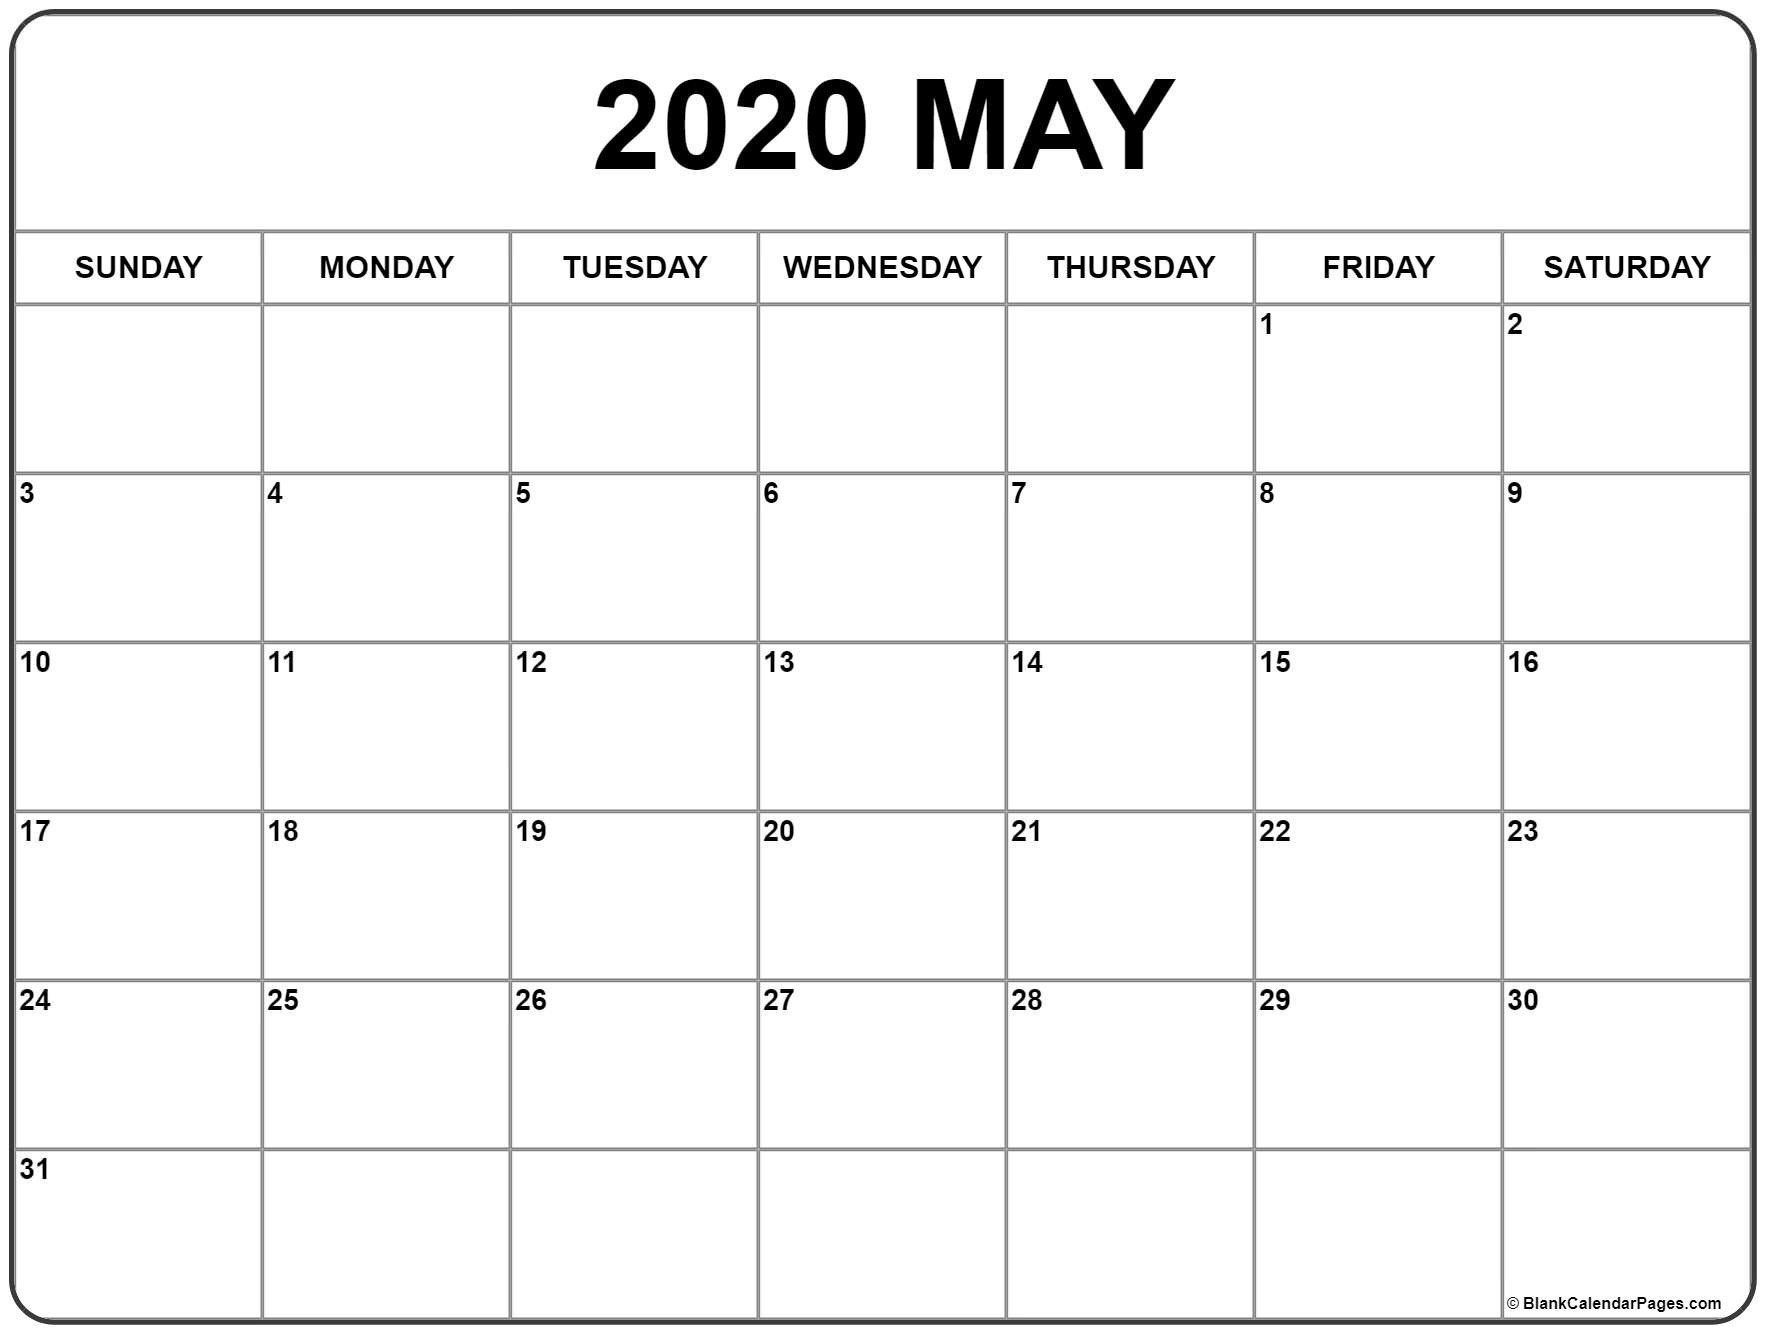 May 2020 Calendar | Free Printable Monthly Calendars  Free Editable 2020 Monthly Calendars With Notes